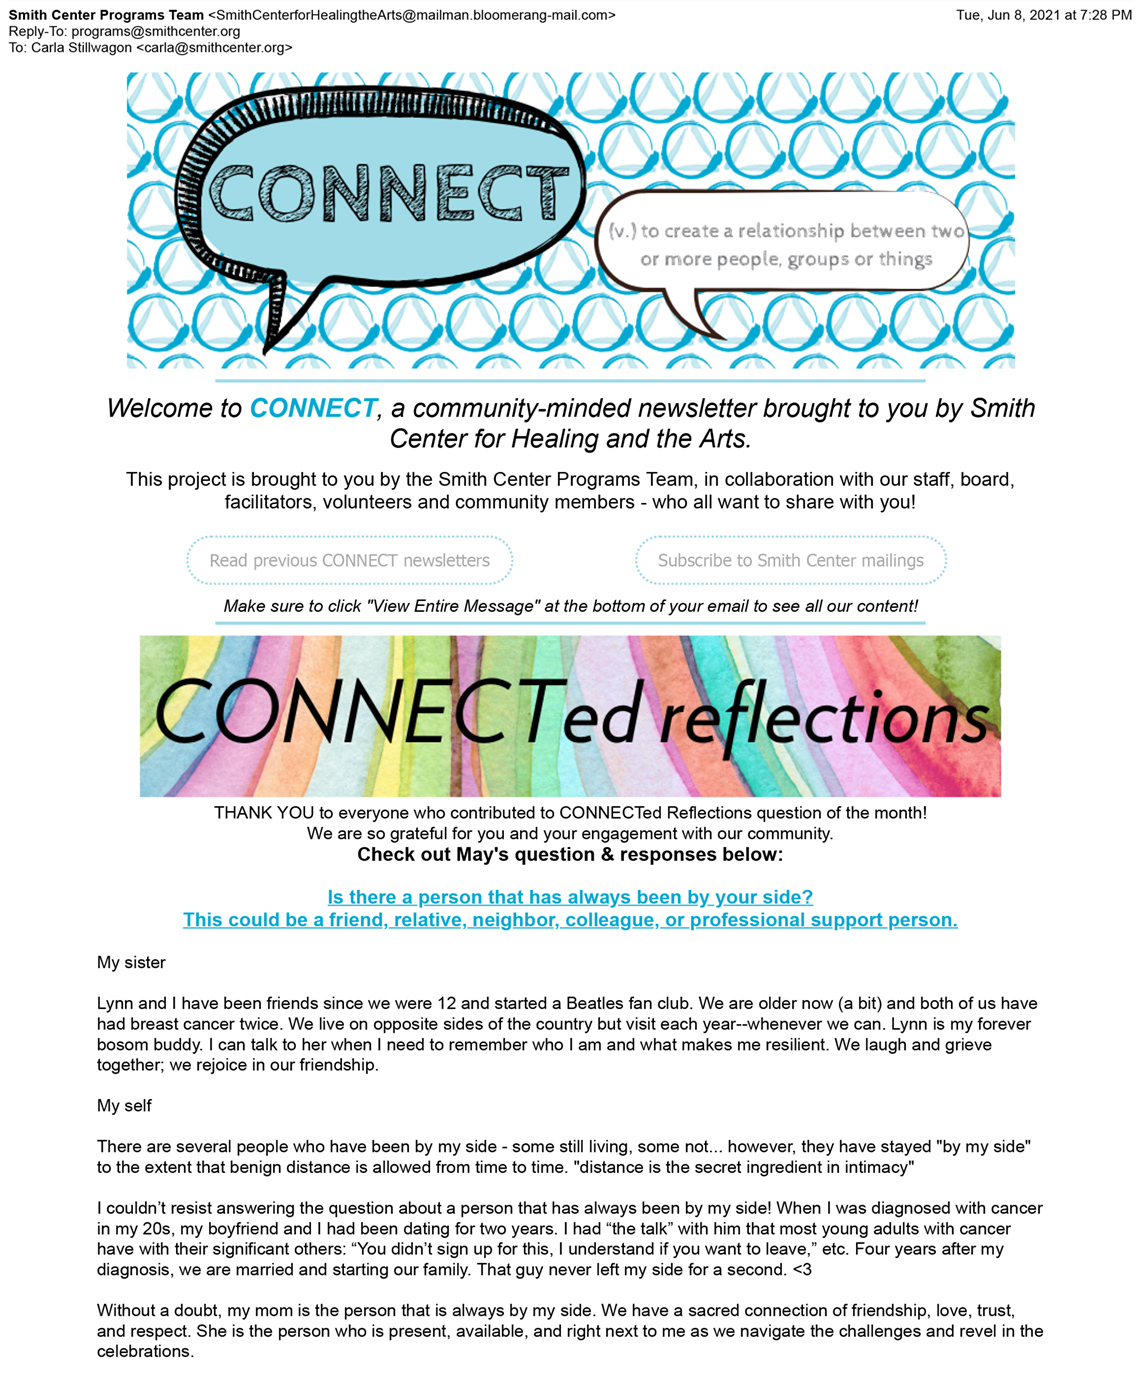 Connection Newsletter Jun 8, 2021